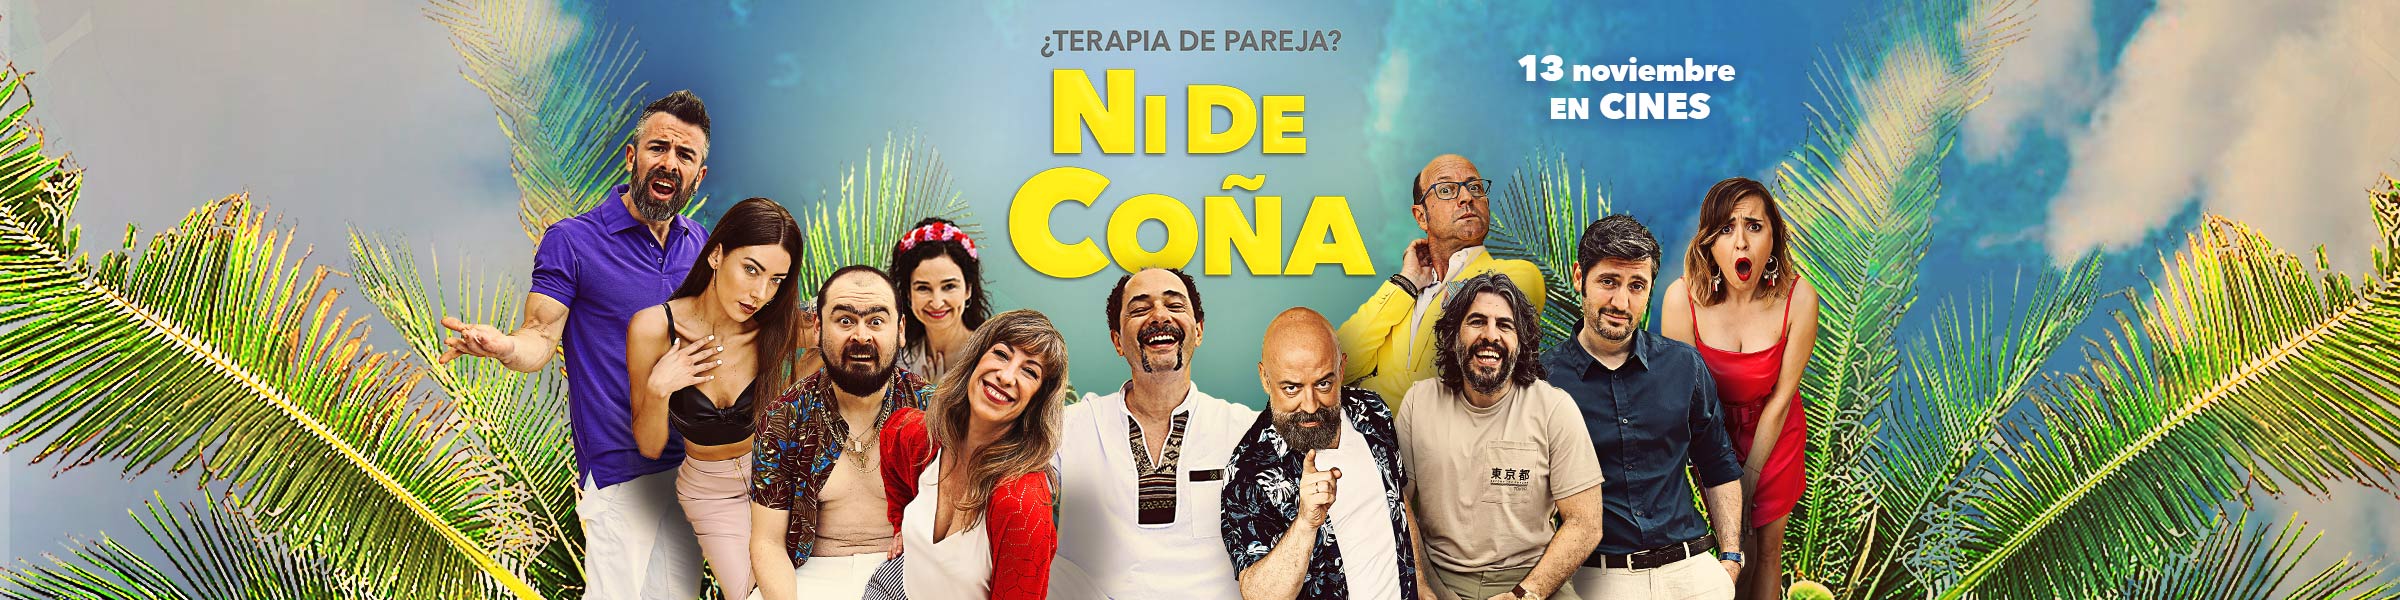 Ni de coña en Cantones Cines de A Coruña